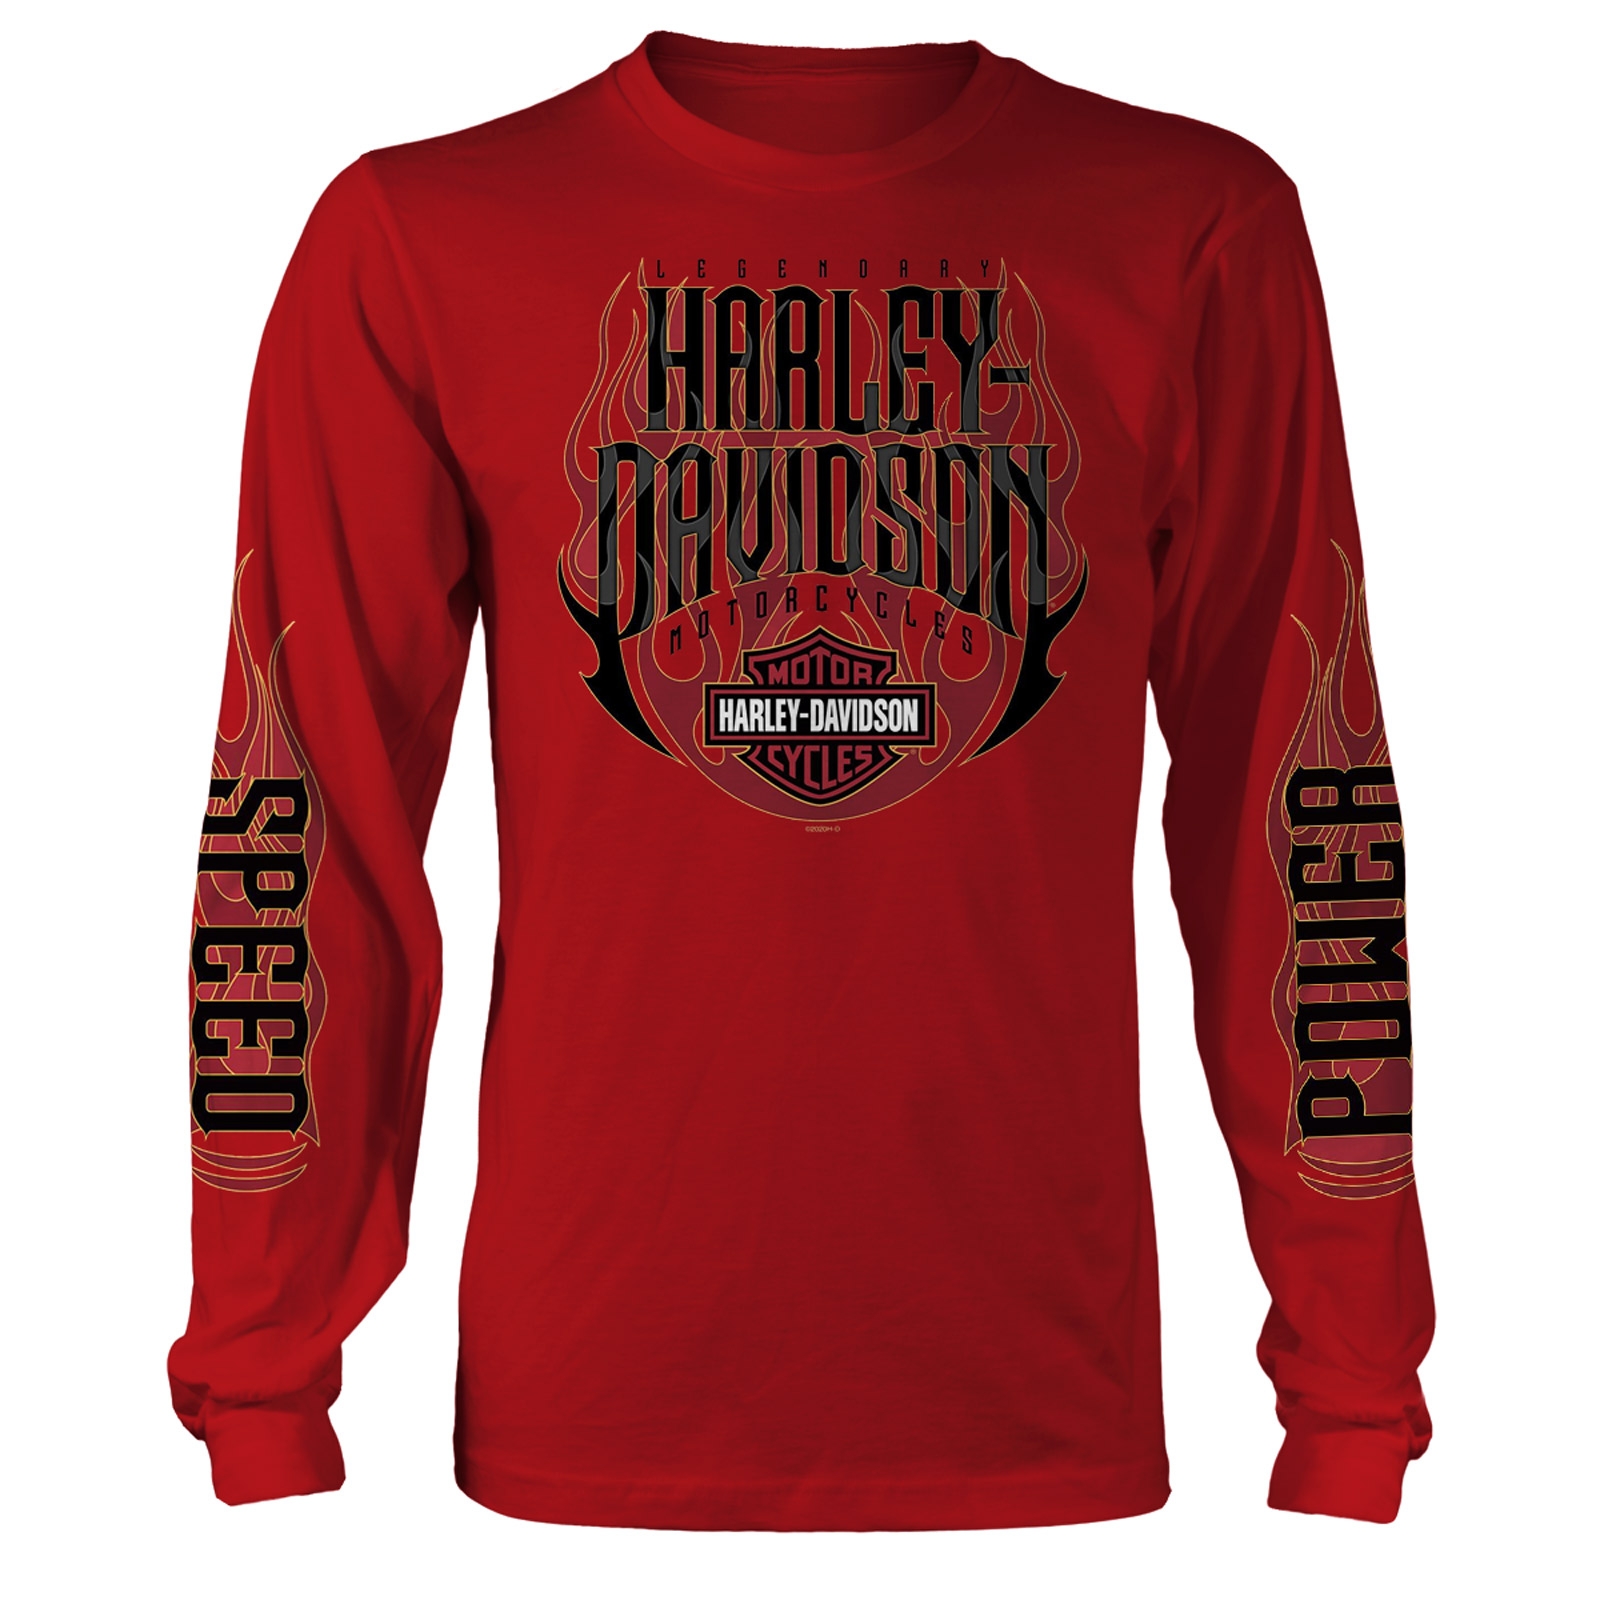 Harley-Davidson Military - Men's Long-Sleeve Red Graphic T-Shirt - Aviano Air Base | Hot Ride LG